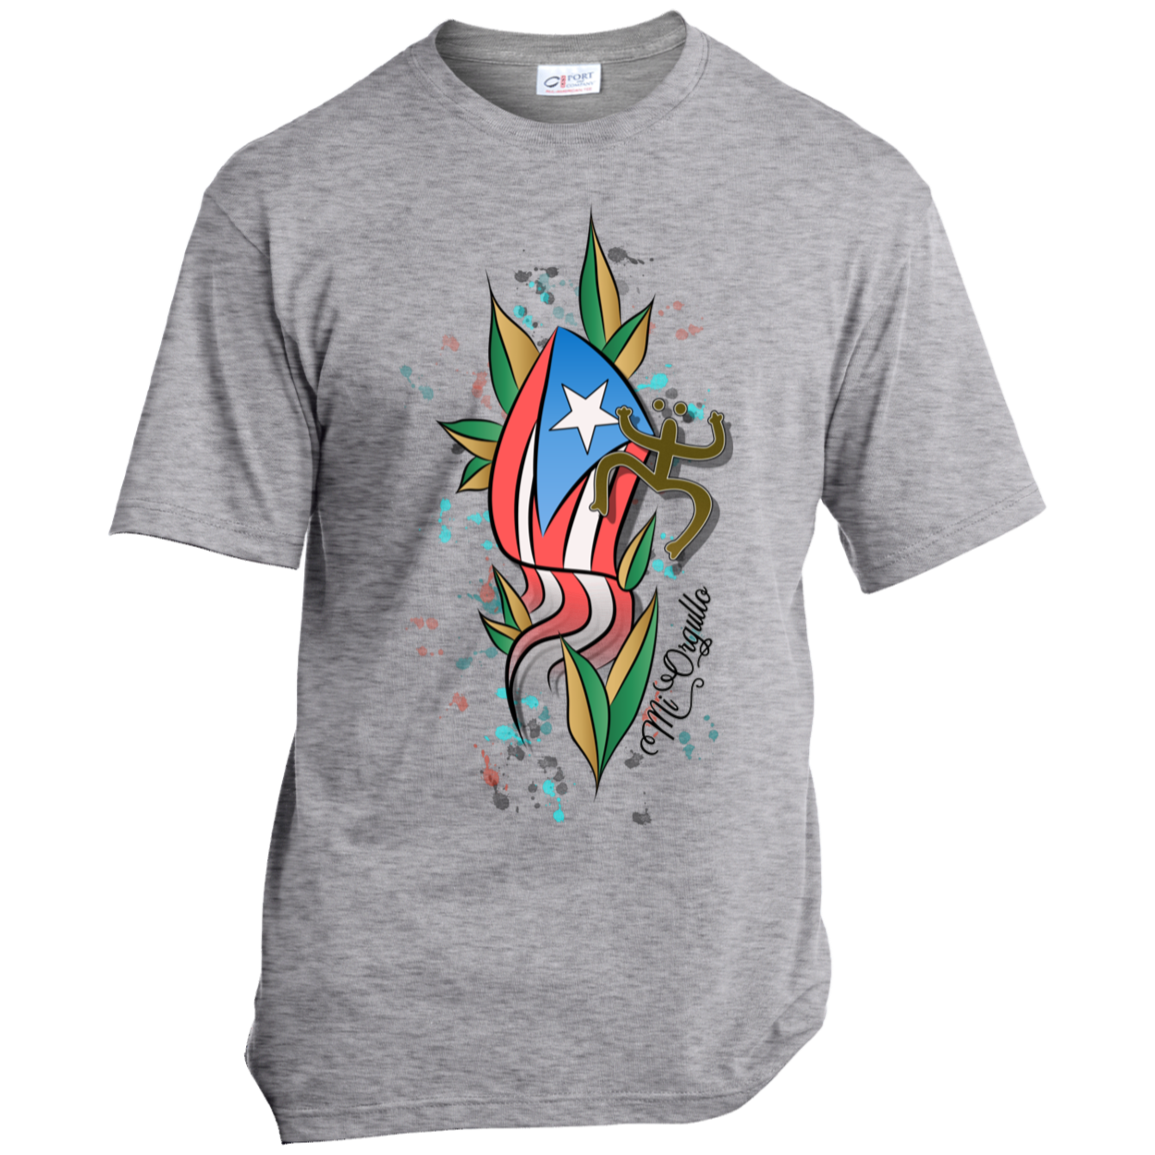 Artistic Mi Orgullo USA Made Unisex T-Shirt - Puerto Rican Pride